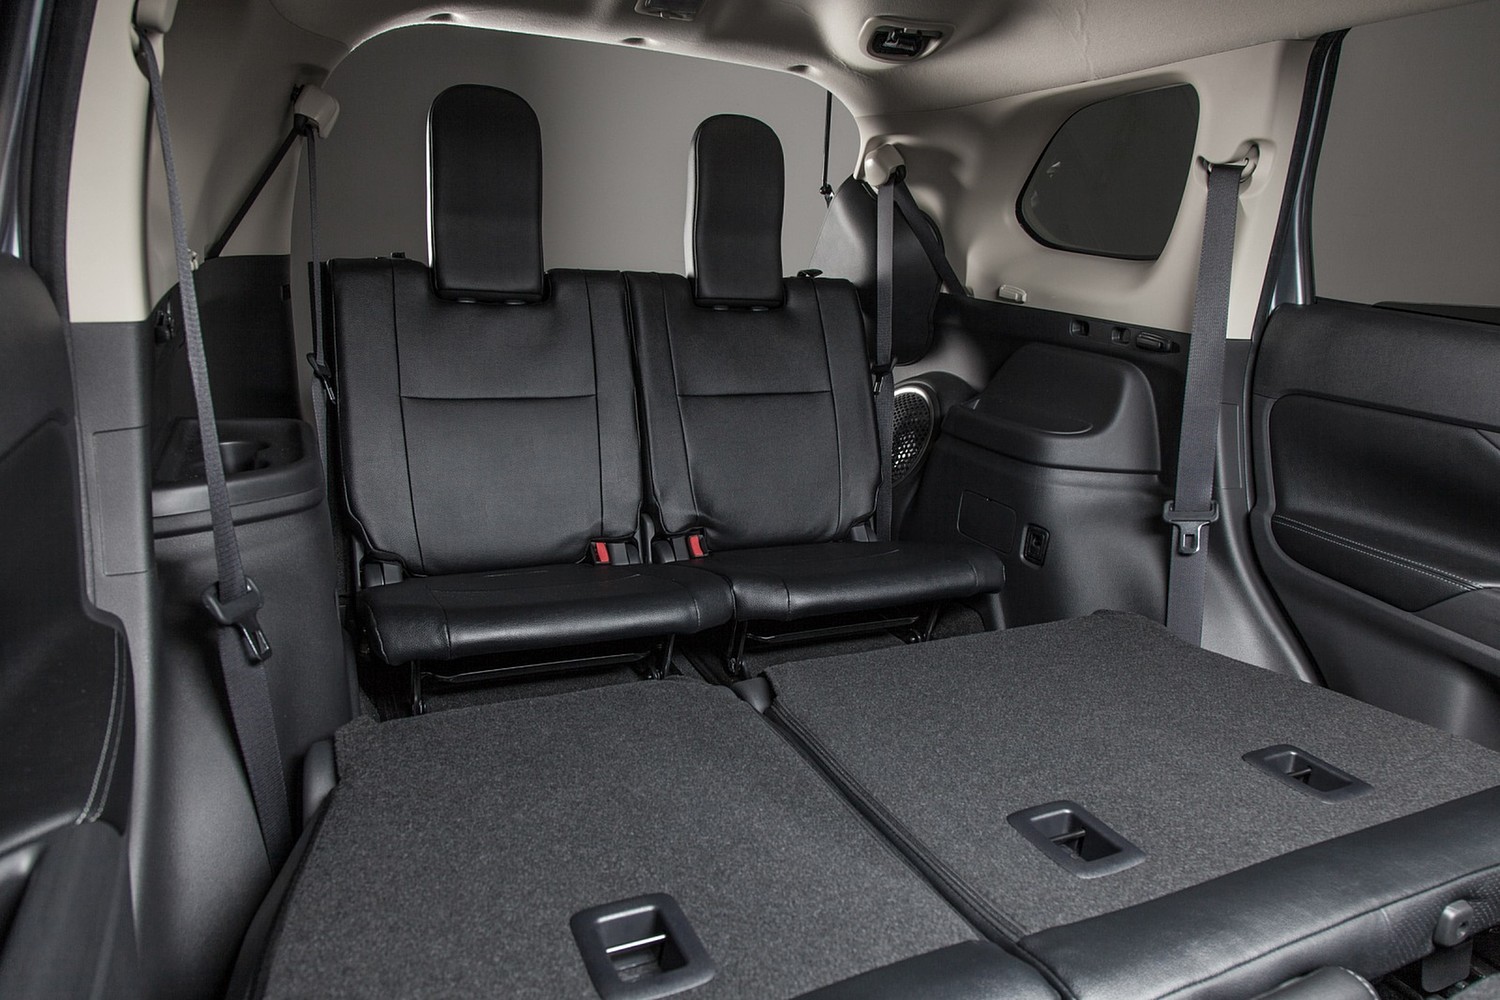 Mitsubishi Outlander GT 4dr SUV Rear Interior (2014 model year shown)